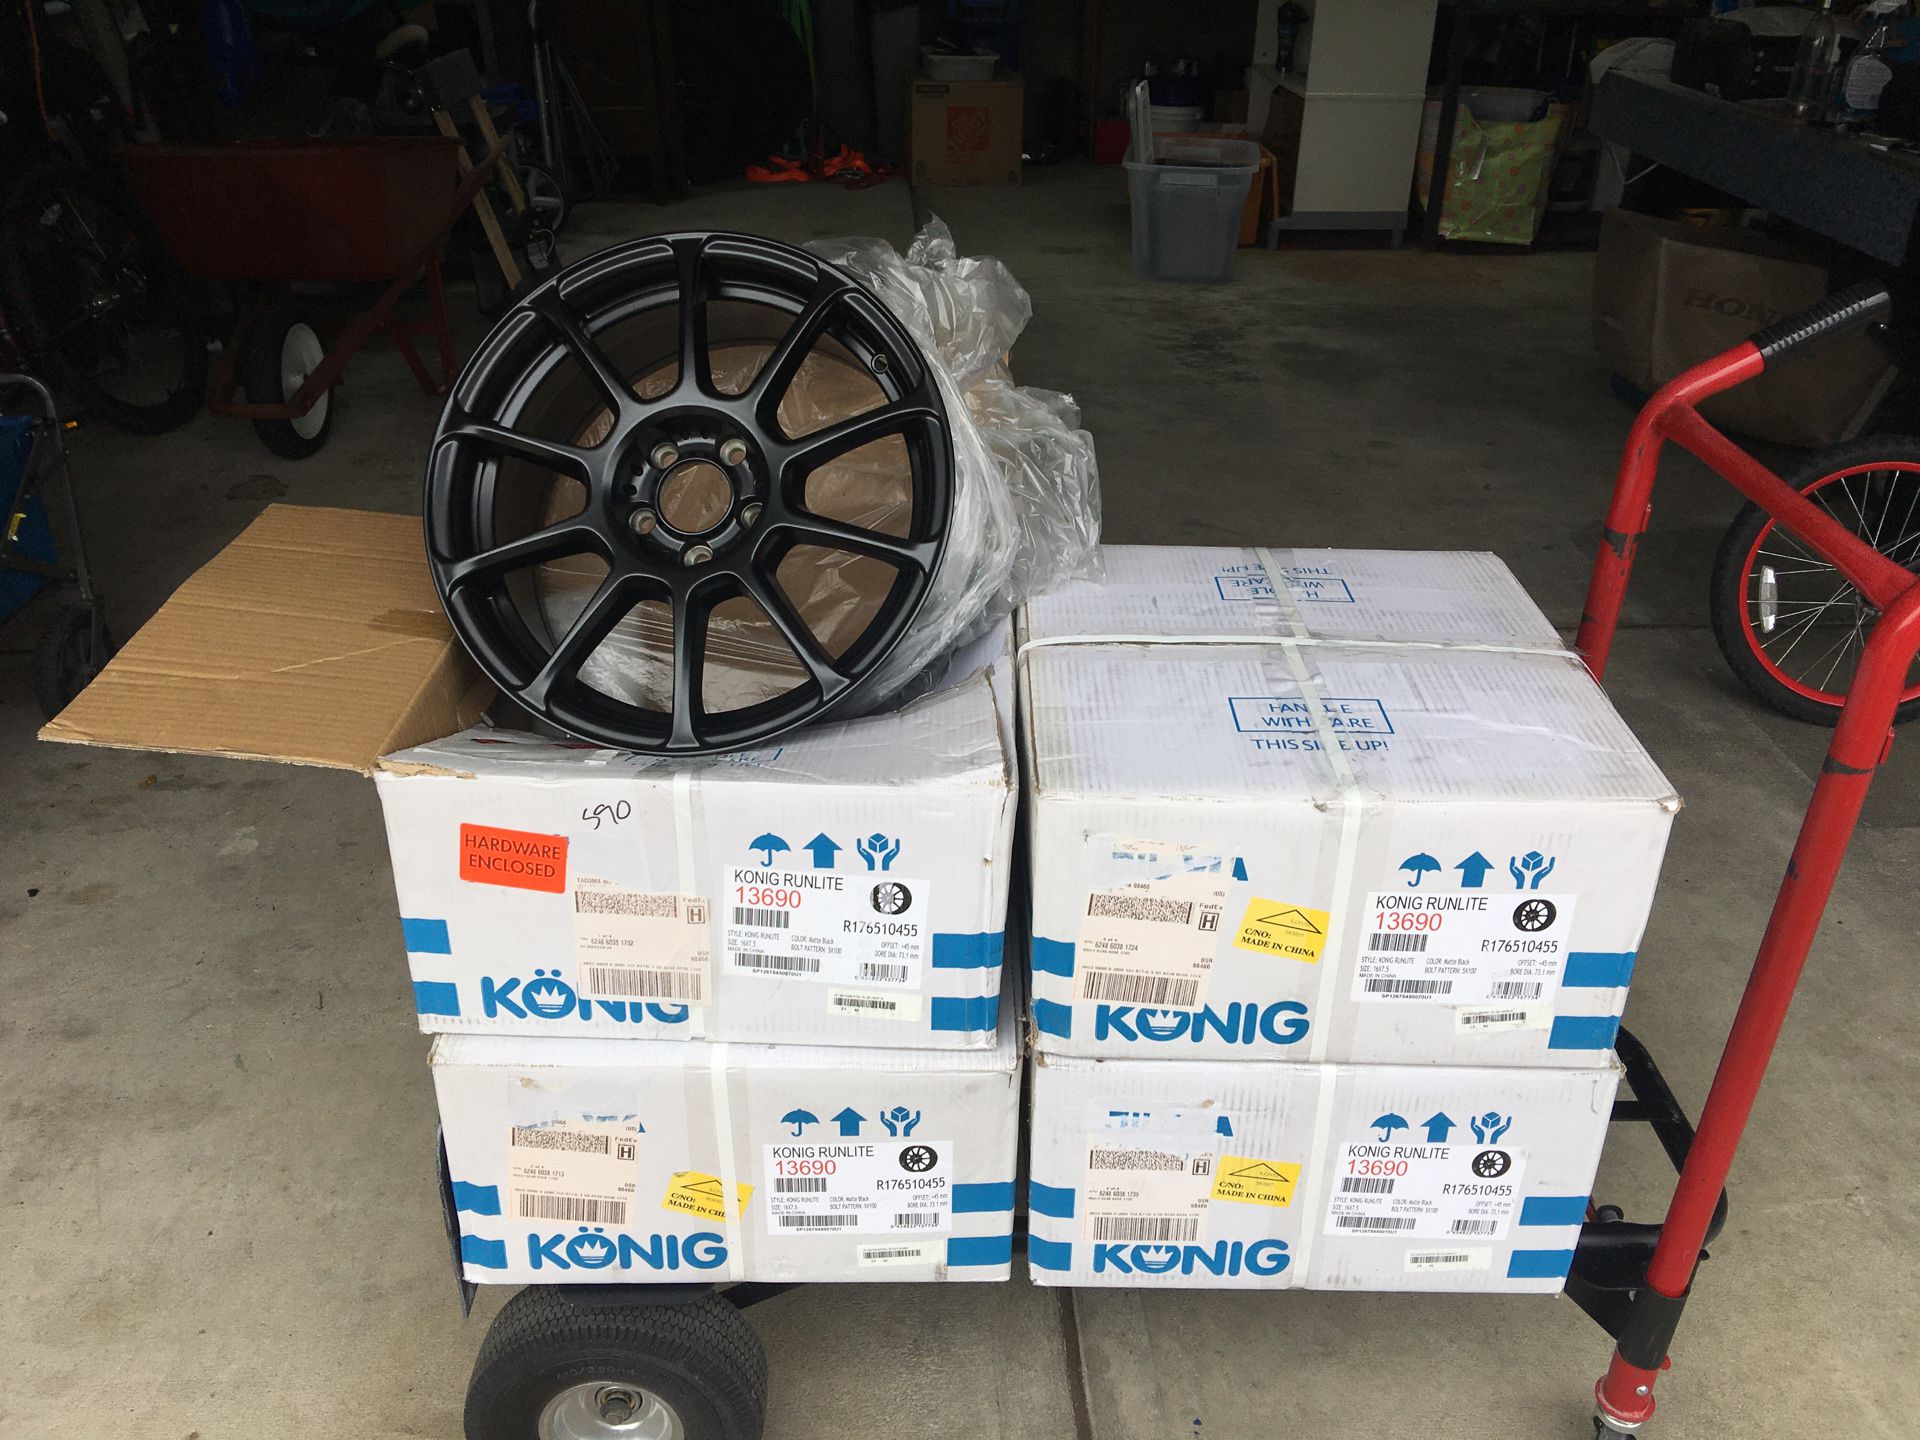 Konig Runlite car wheels, set of 4 brand new